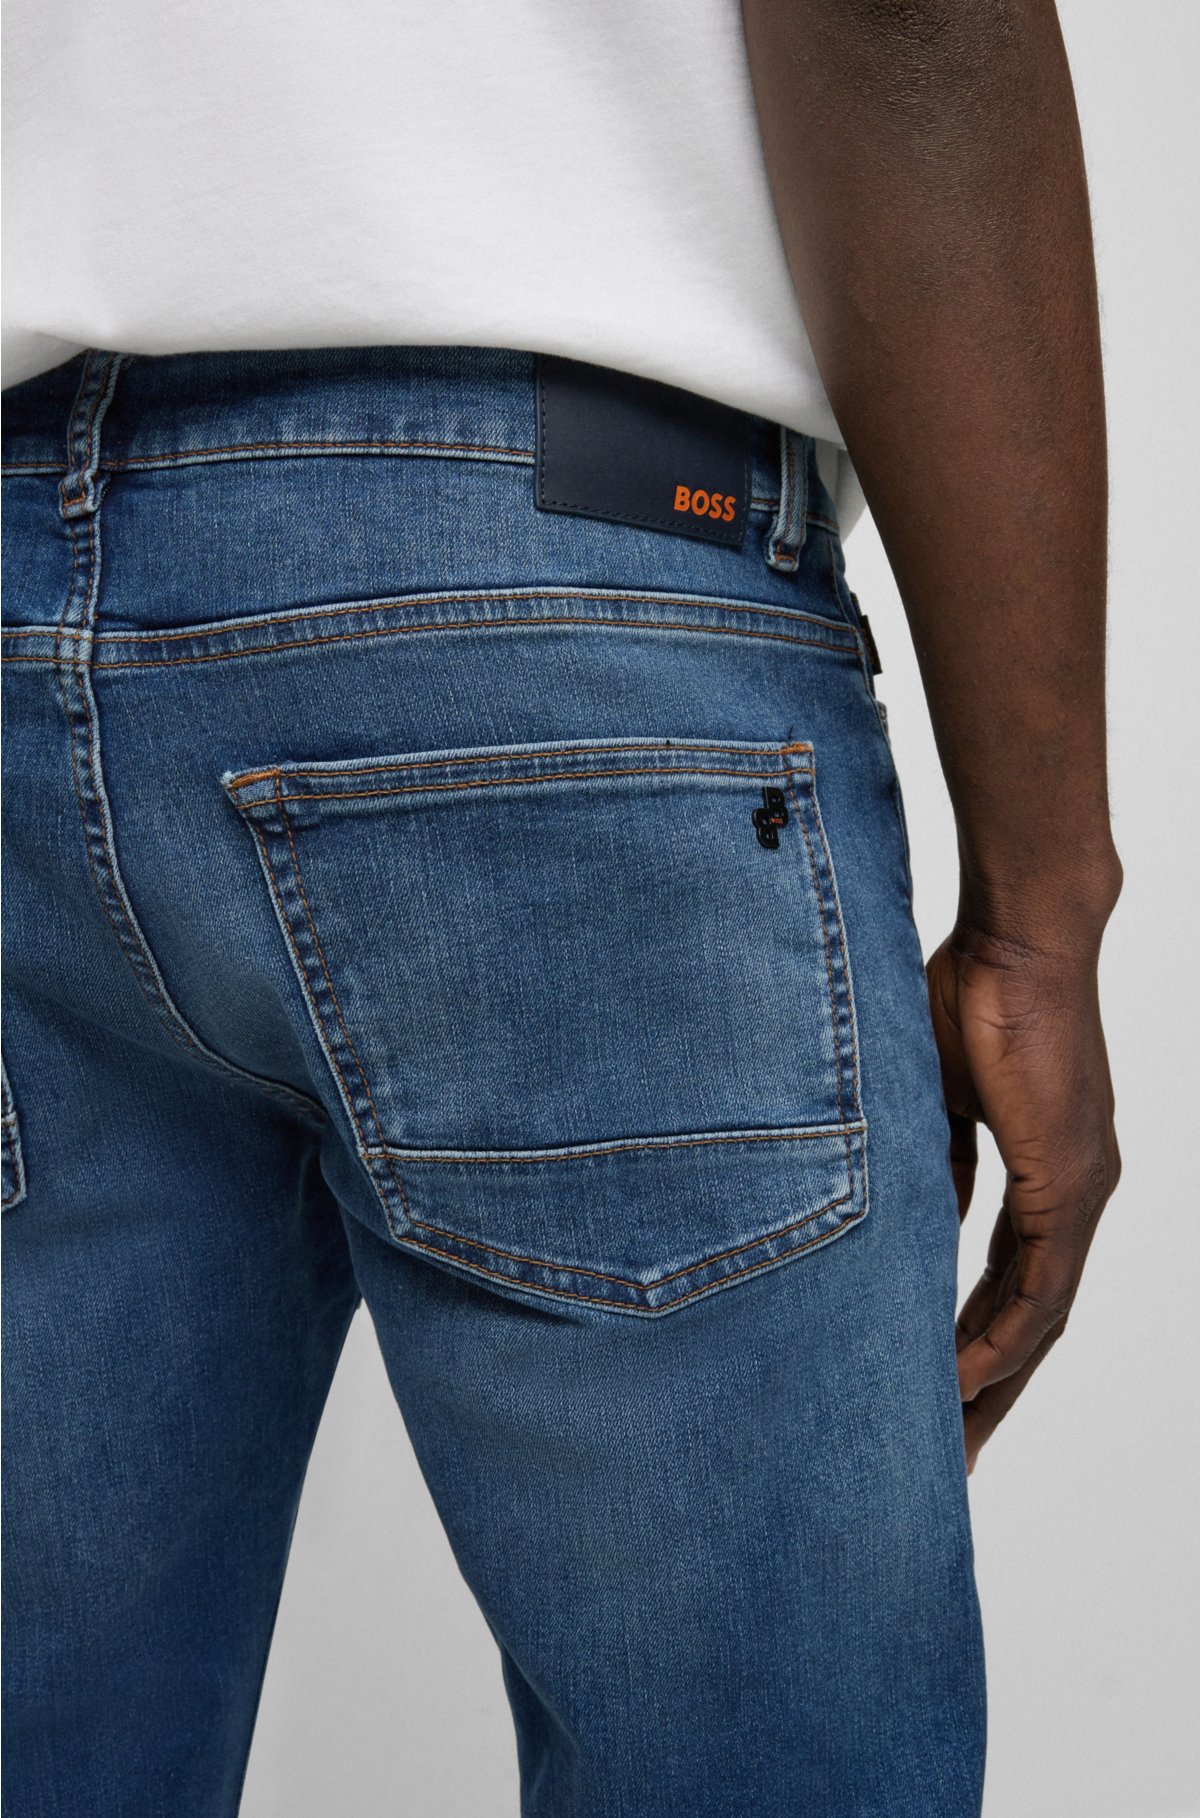 Saks Rodet Guggenheim Museum BOSS - Blue jeans in super-stretch denim